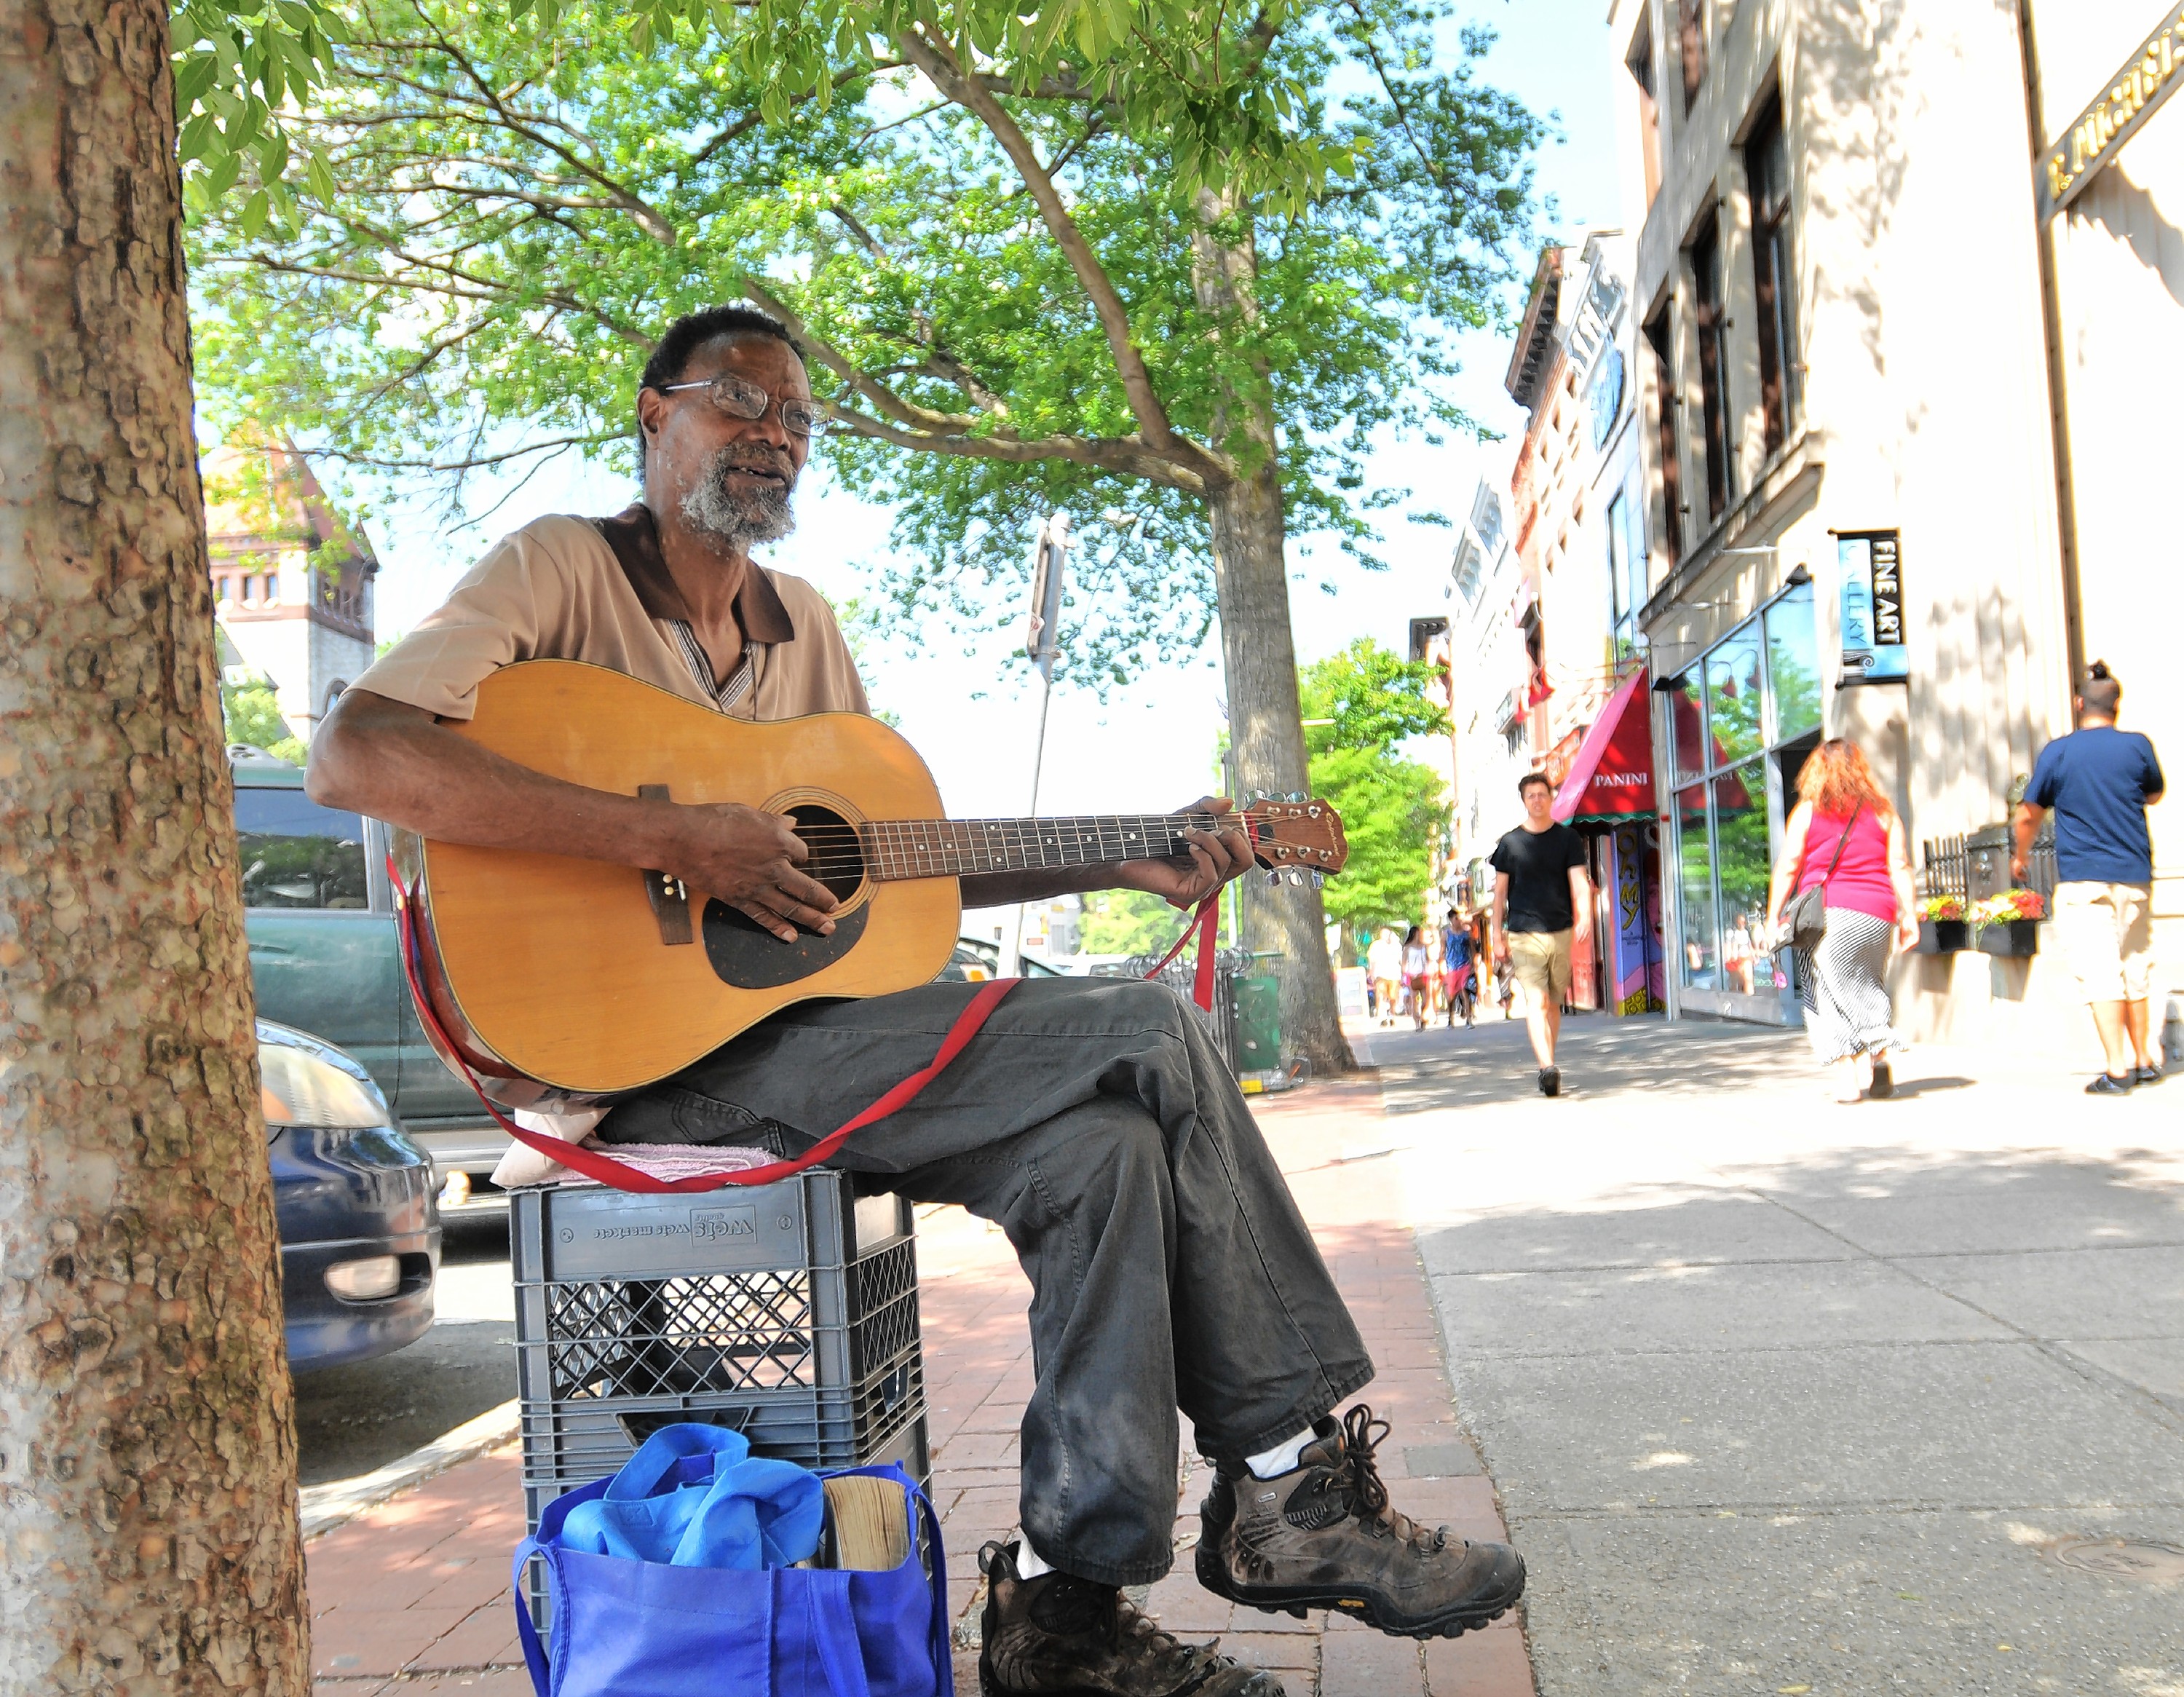 Retired: Northampton’s ‘Downtown’ Daniel Packs Up His Guitar